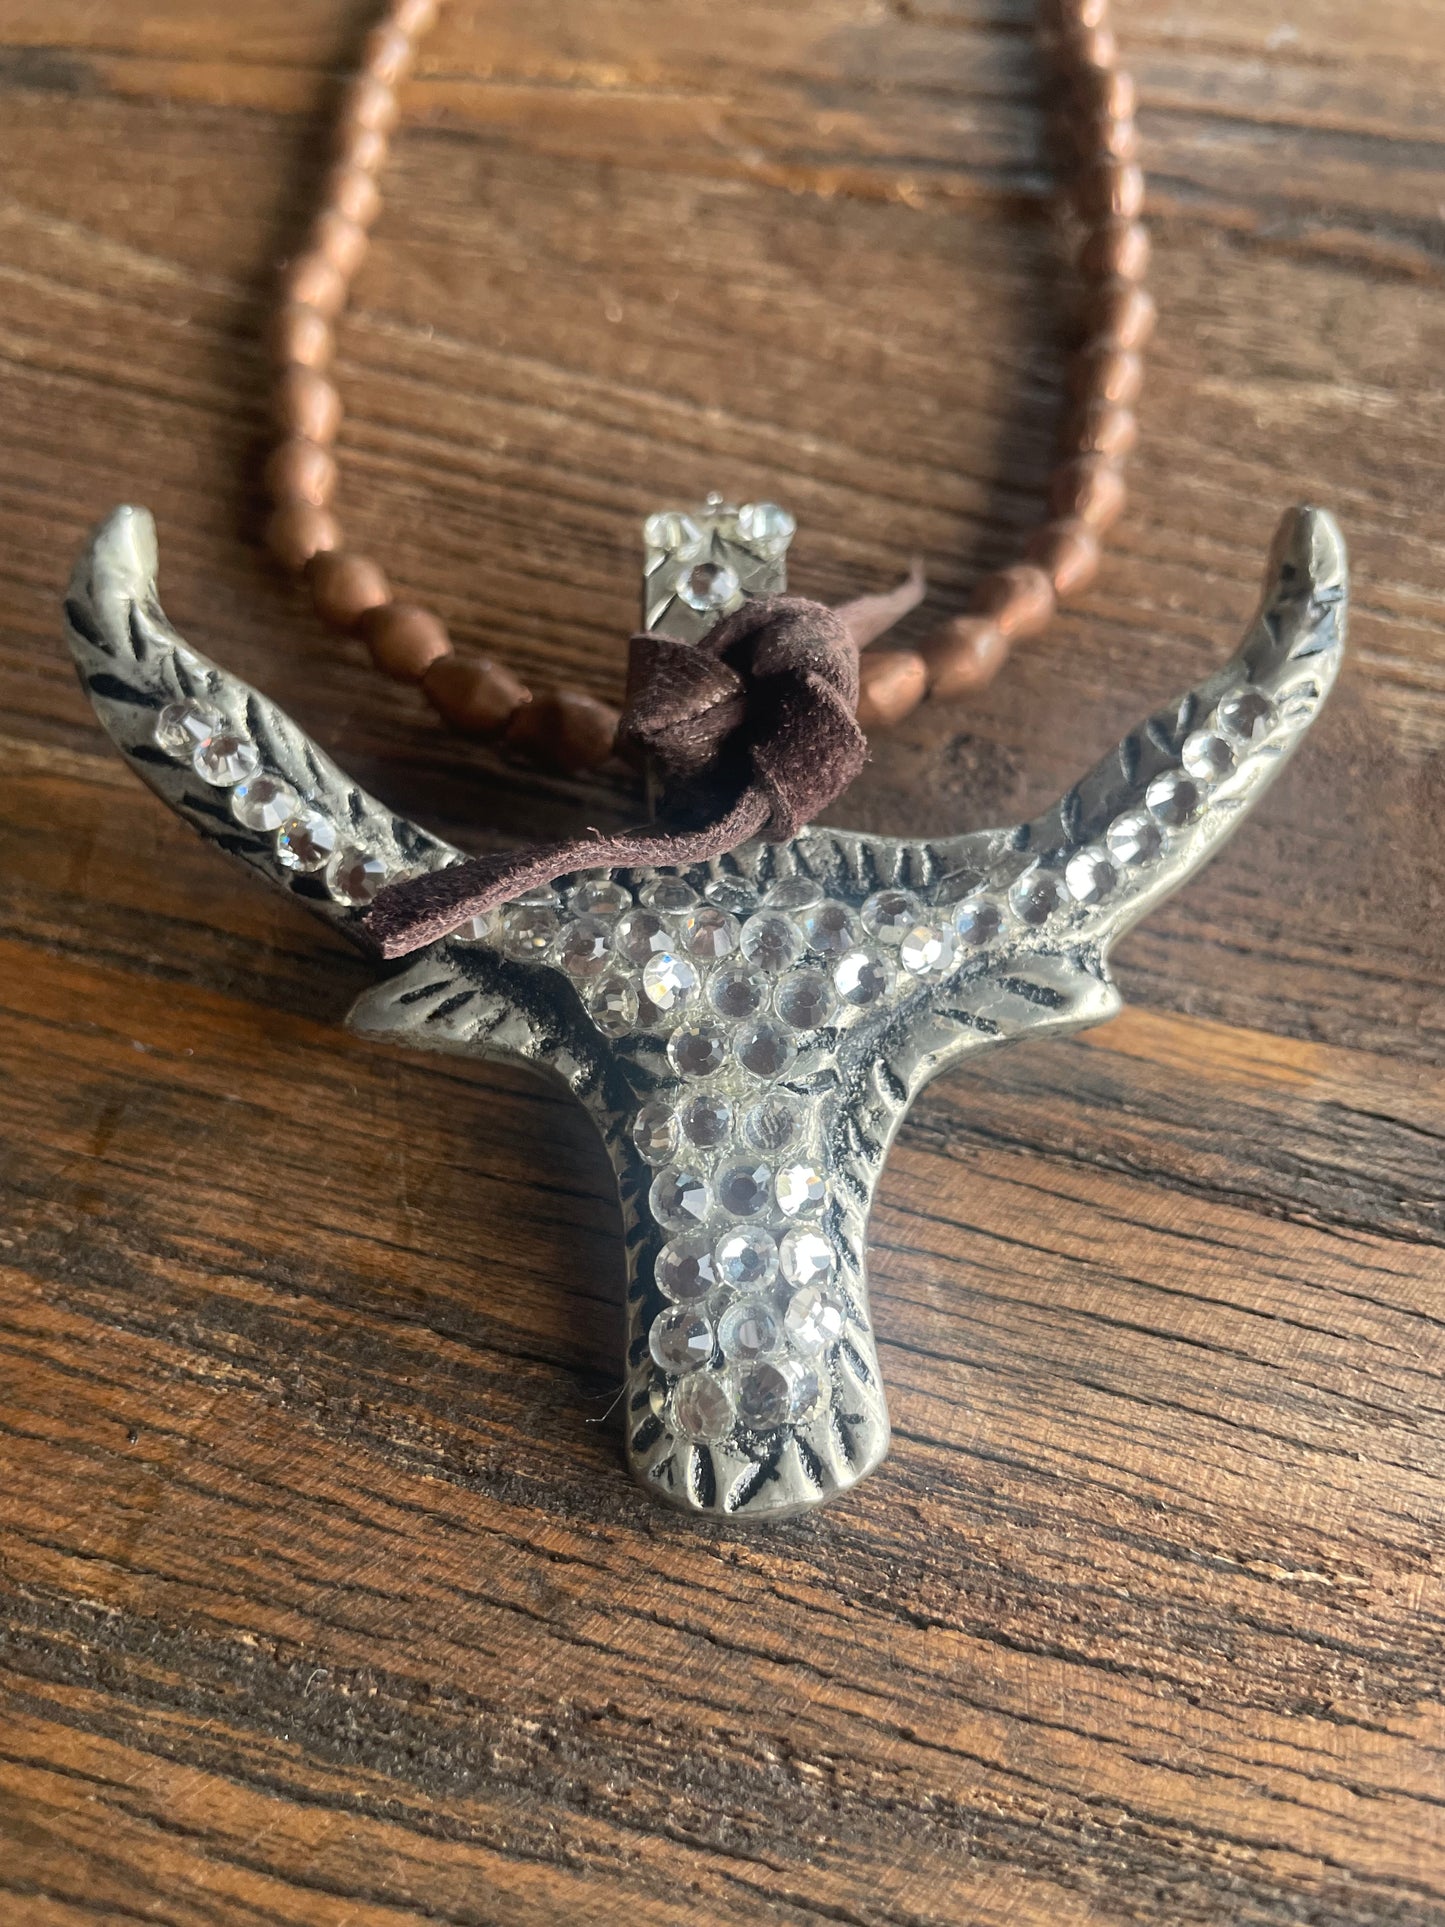 Longhorn necklace